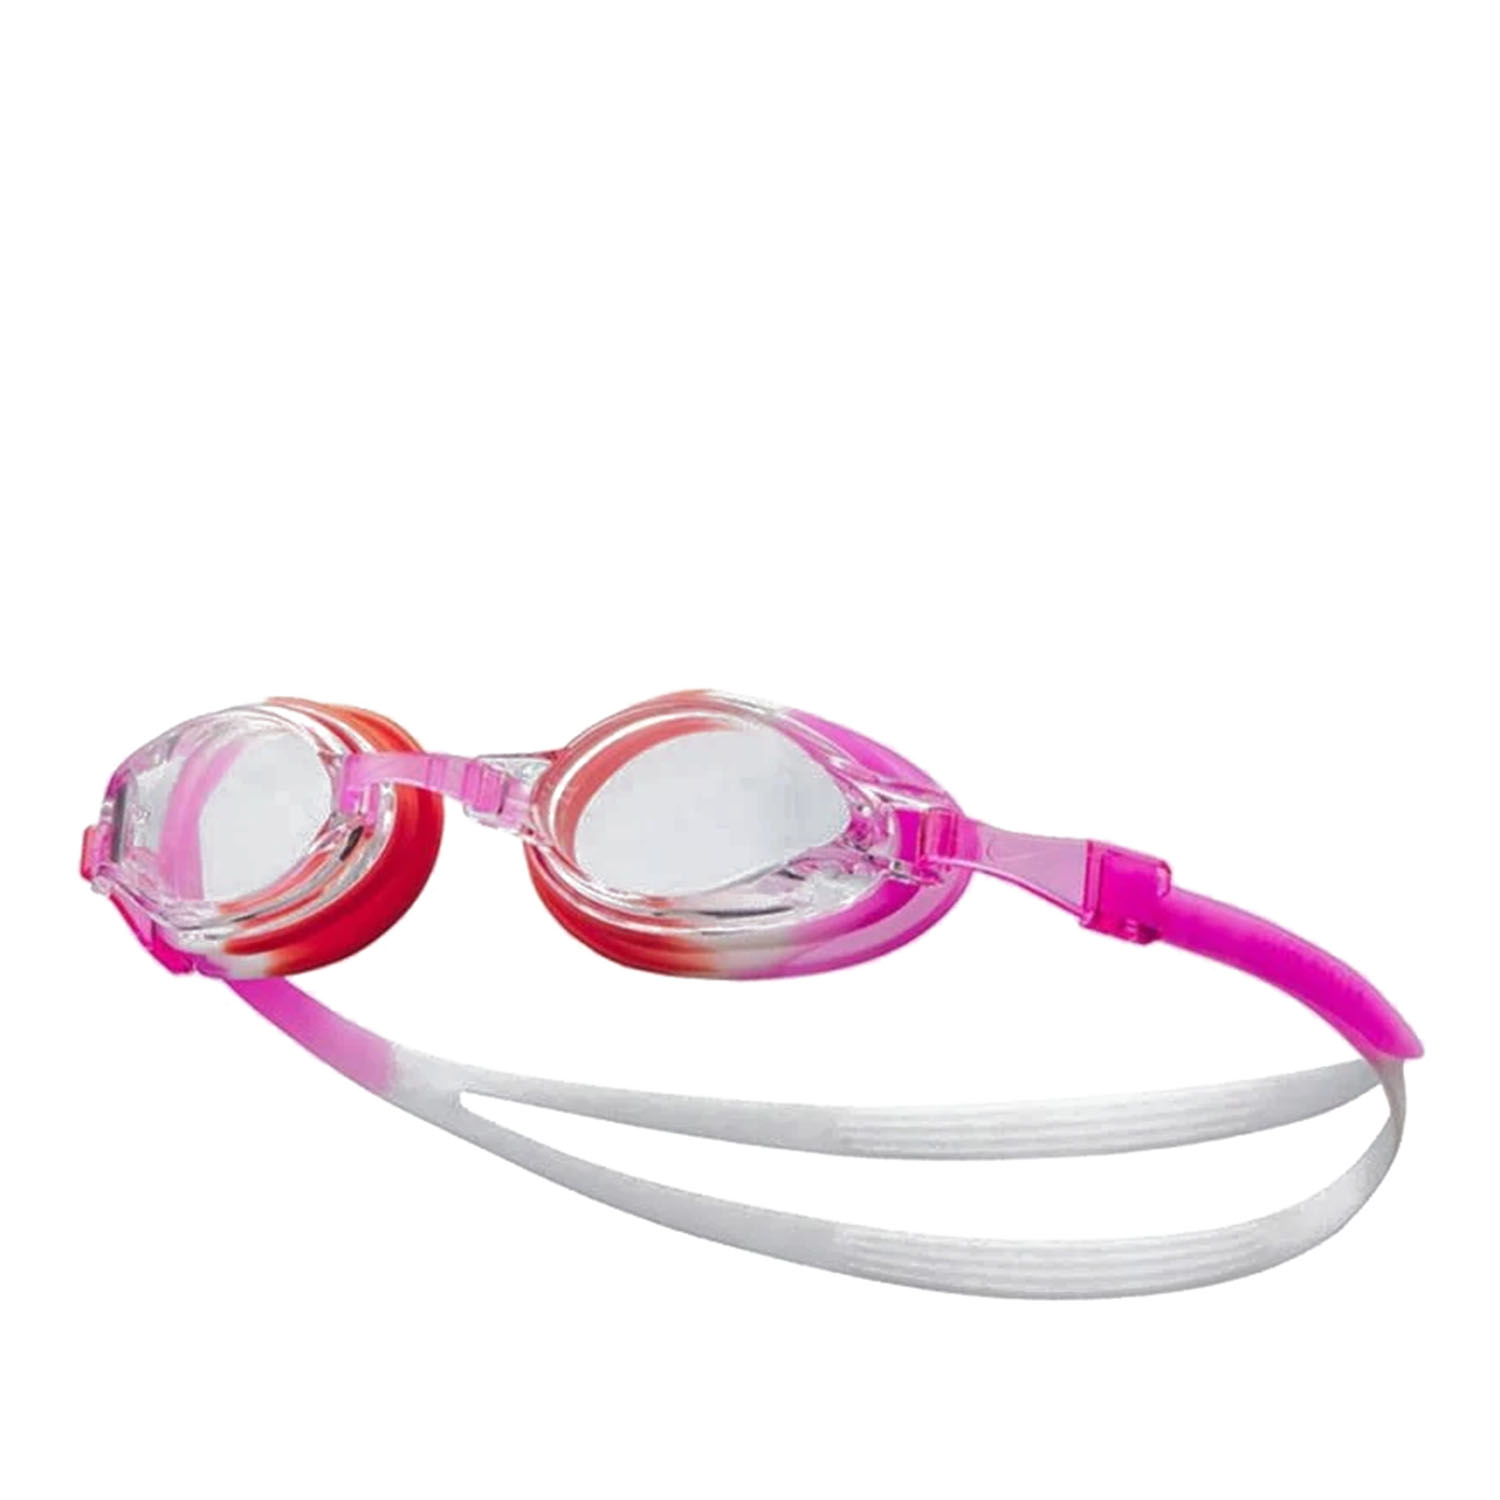 Очки Для Плавания Nike Chrome Junior белый / розовый